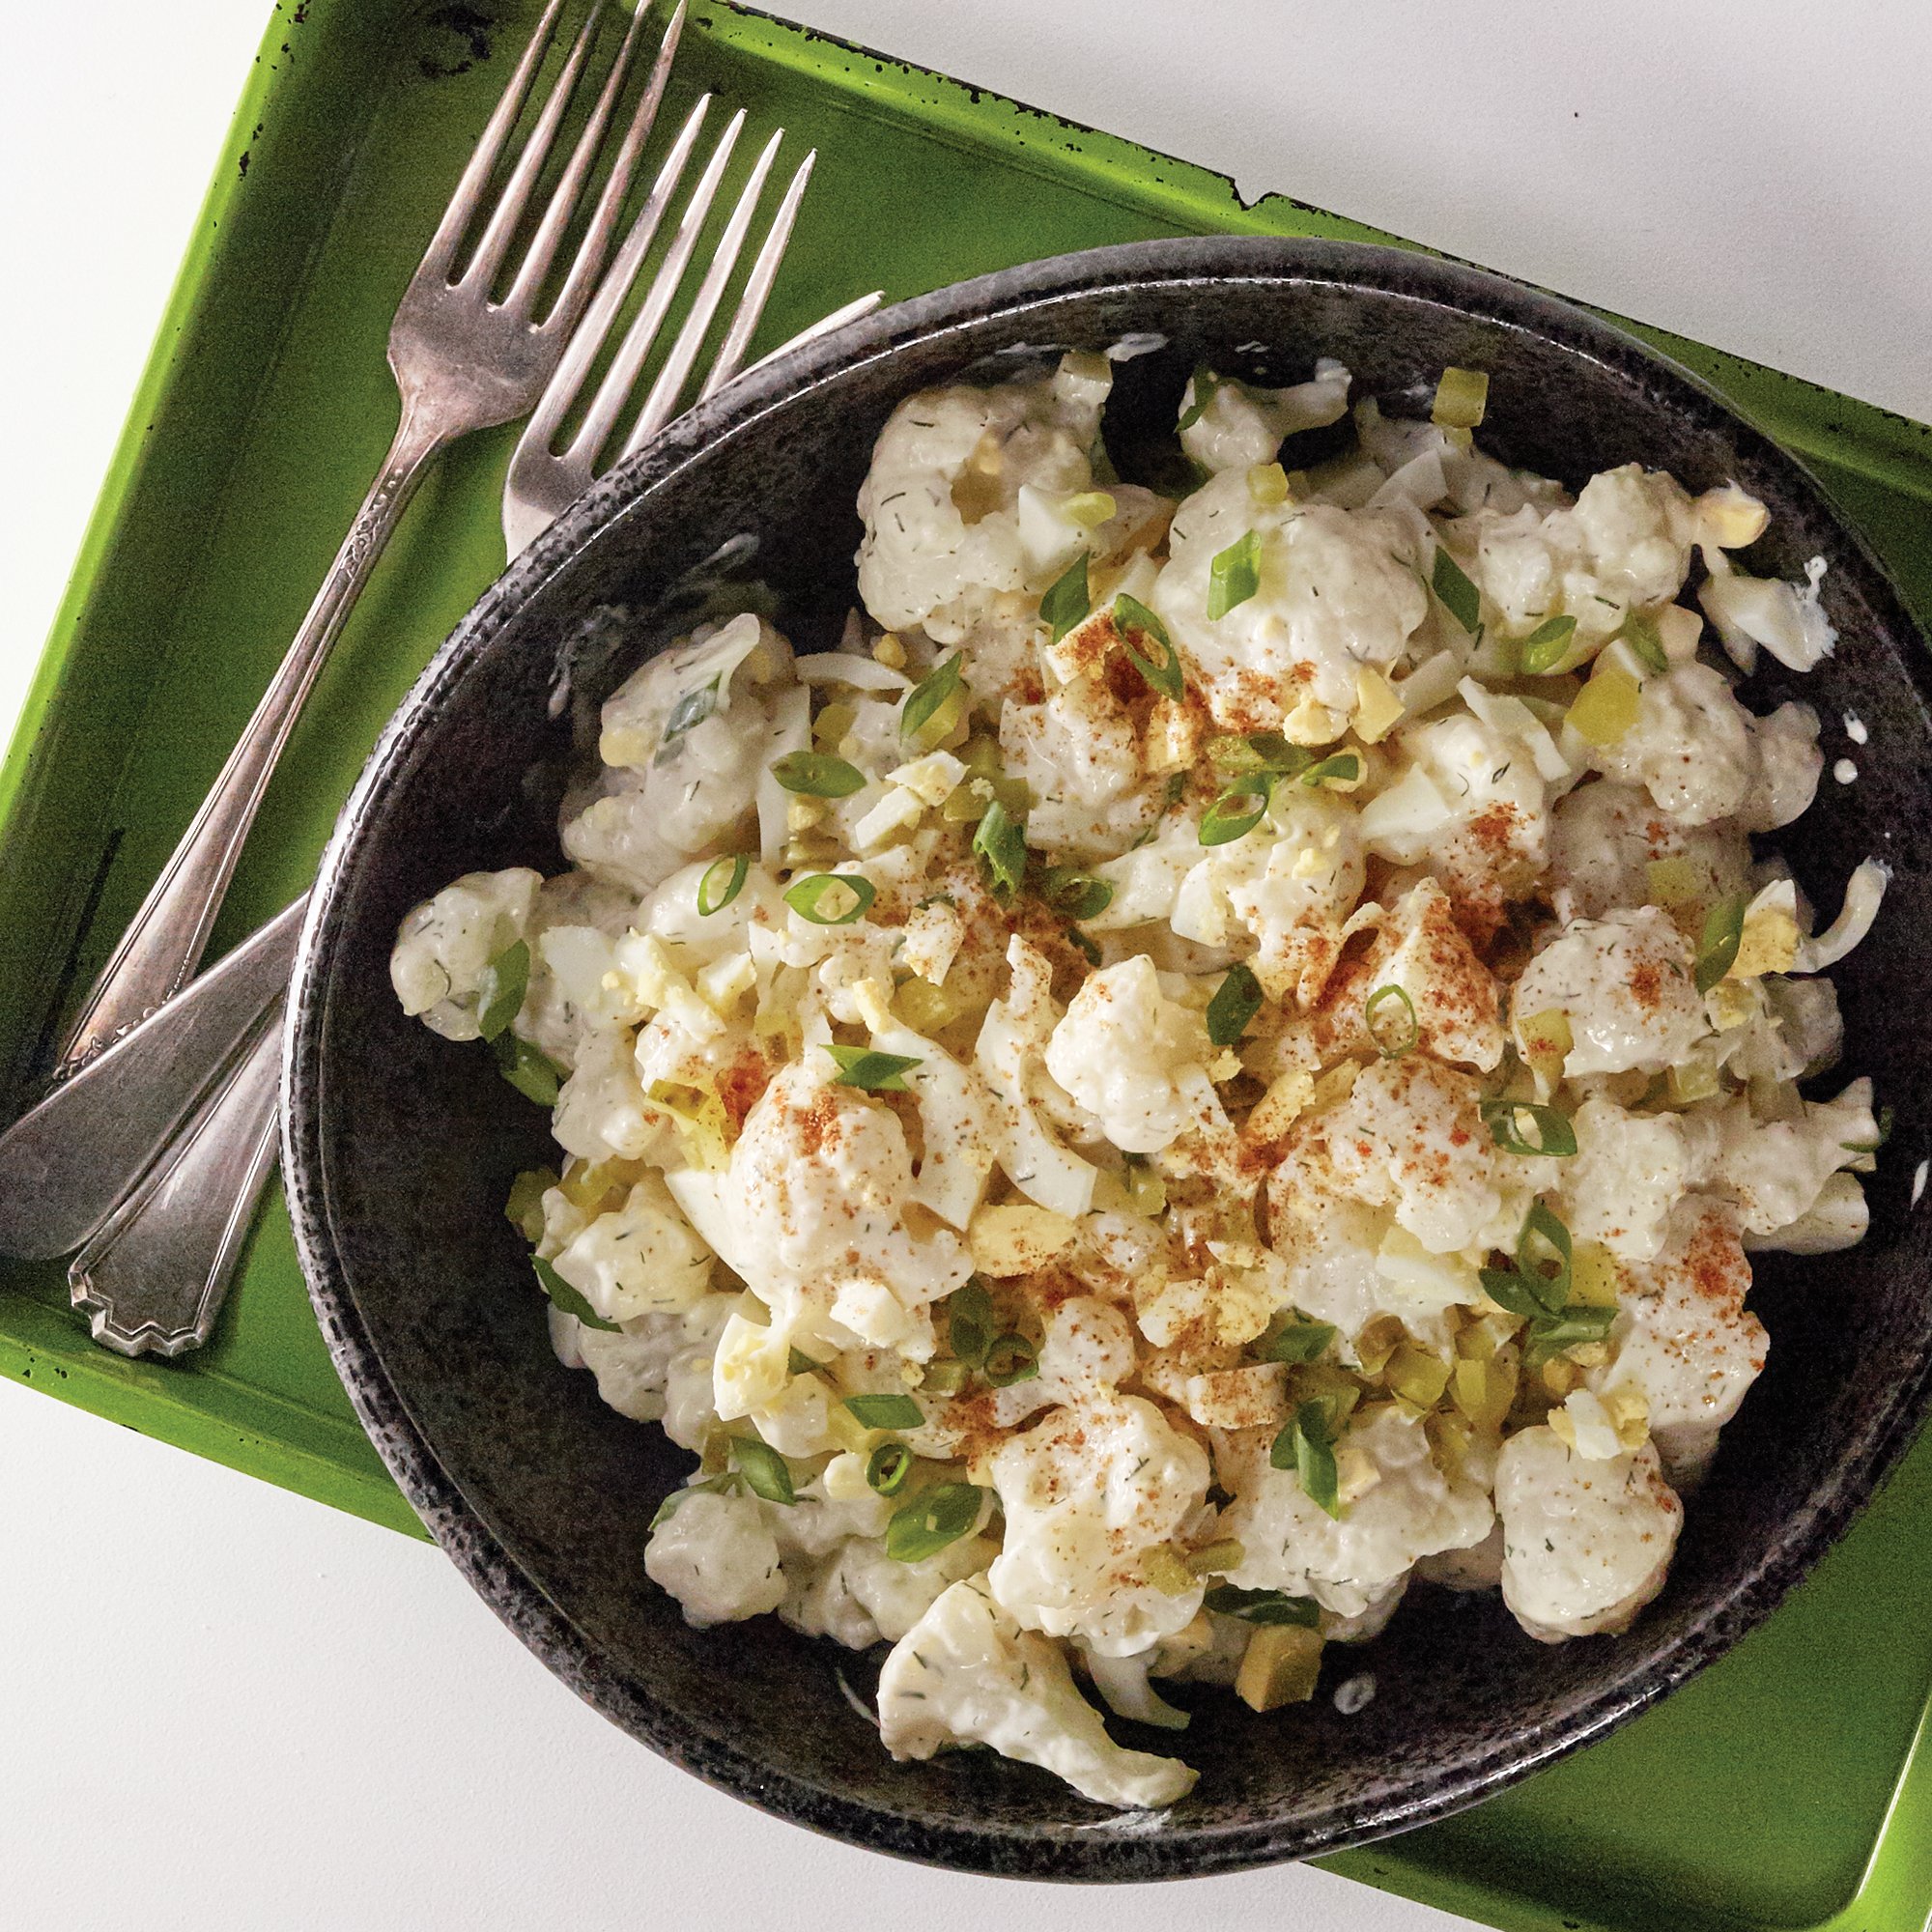 Cauliflower Potato Salad Recipe from H-E-B